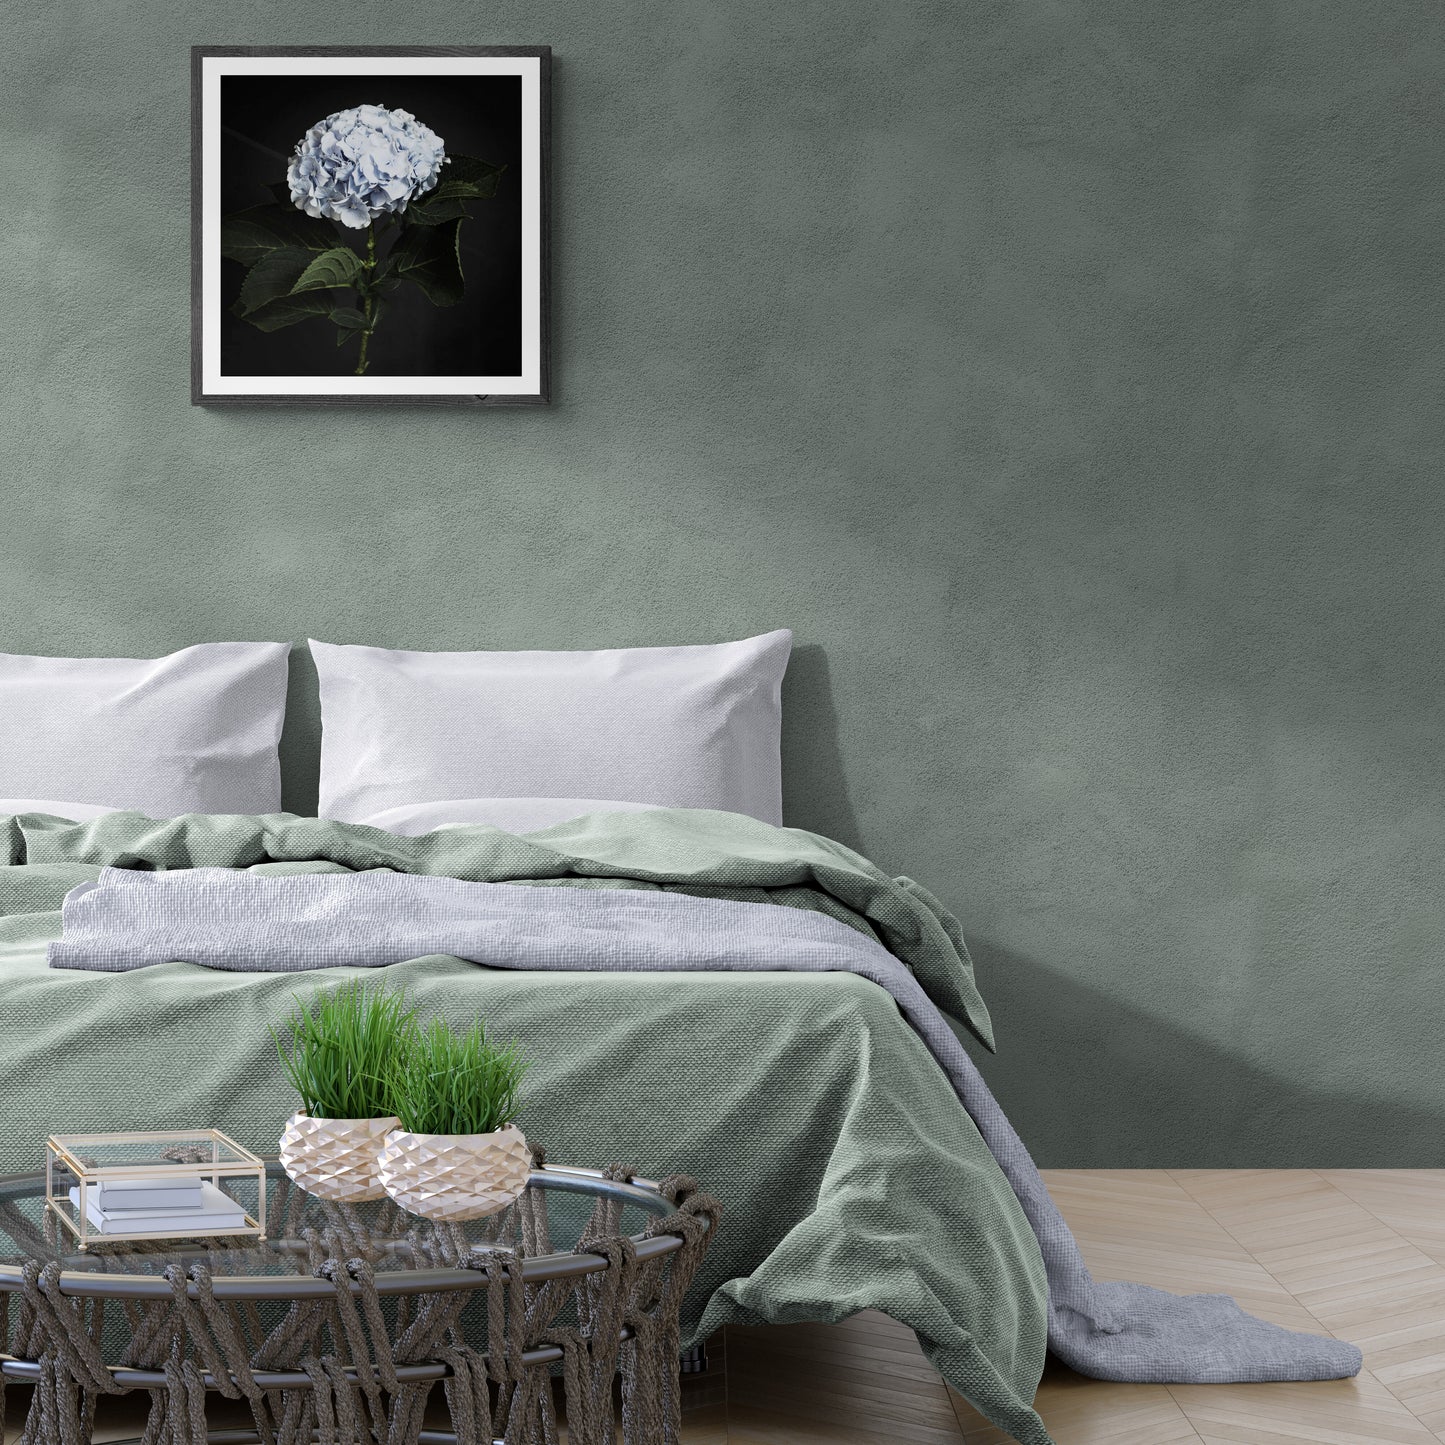 Hydrangea Wall Art, Image of Hydrangea, Flower Wall Decor